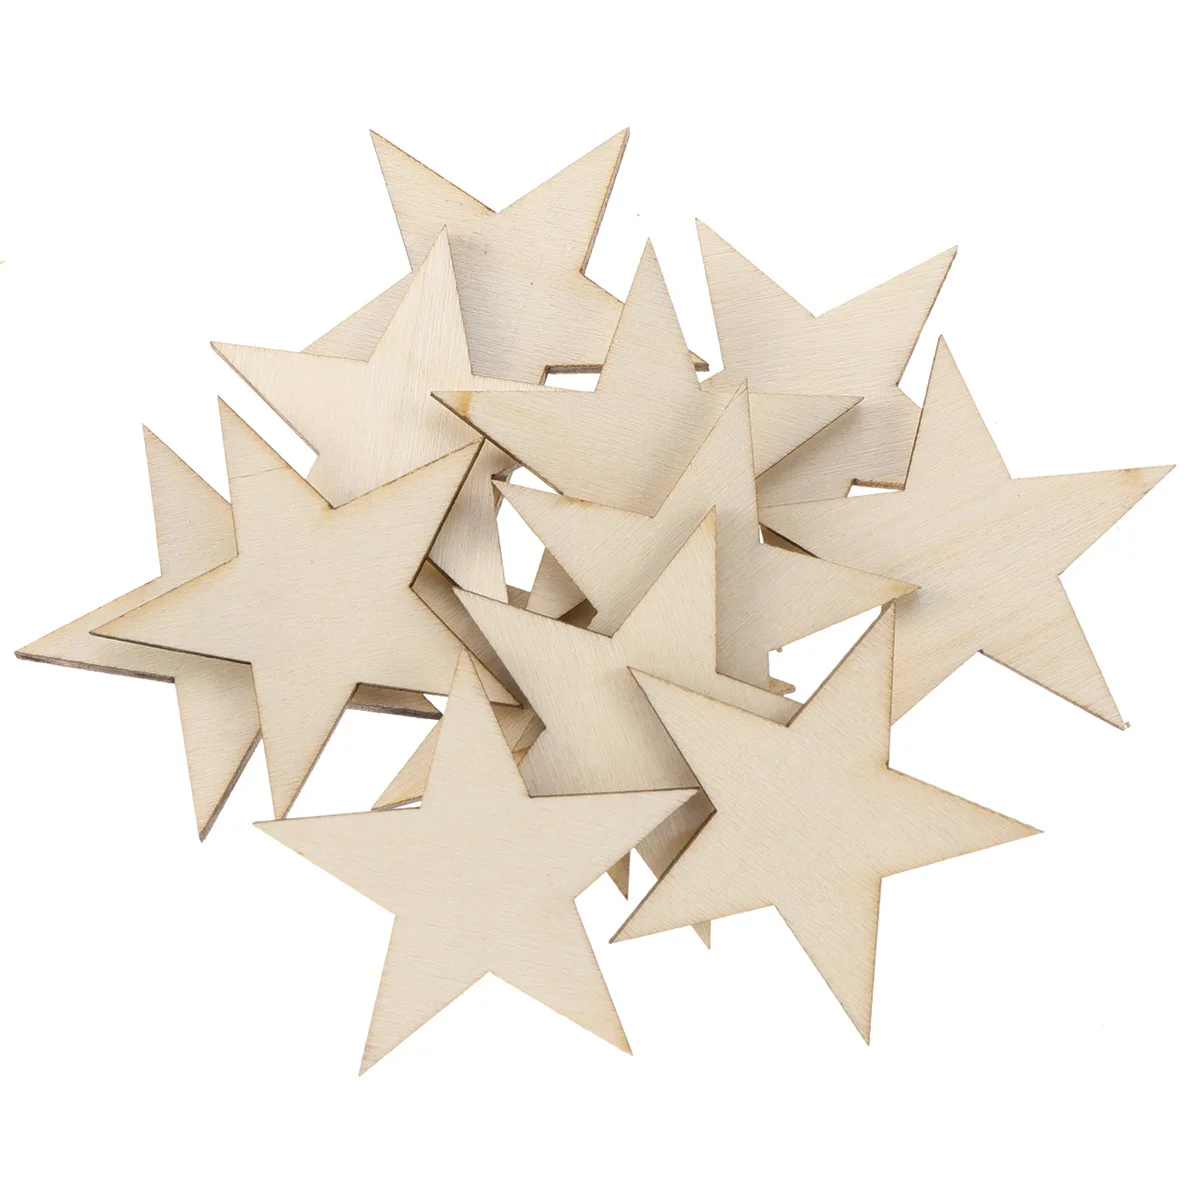 

50 Pcs Wood Log Nativity Crafts Star Gift Tags Wood Star Discs Star Jewelry Confetti Wood Star Discs Star Wood Pieces